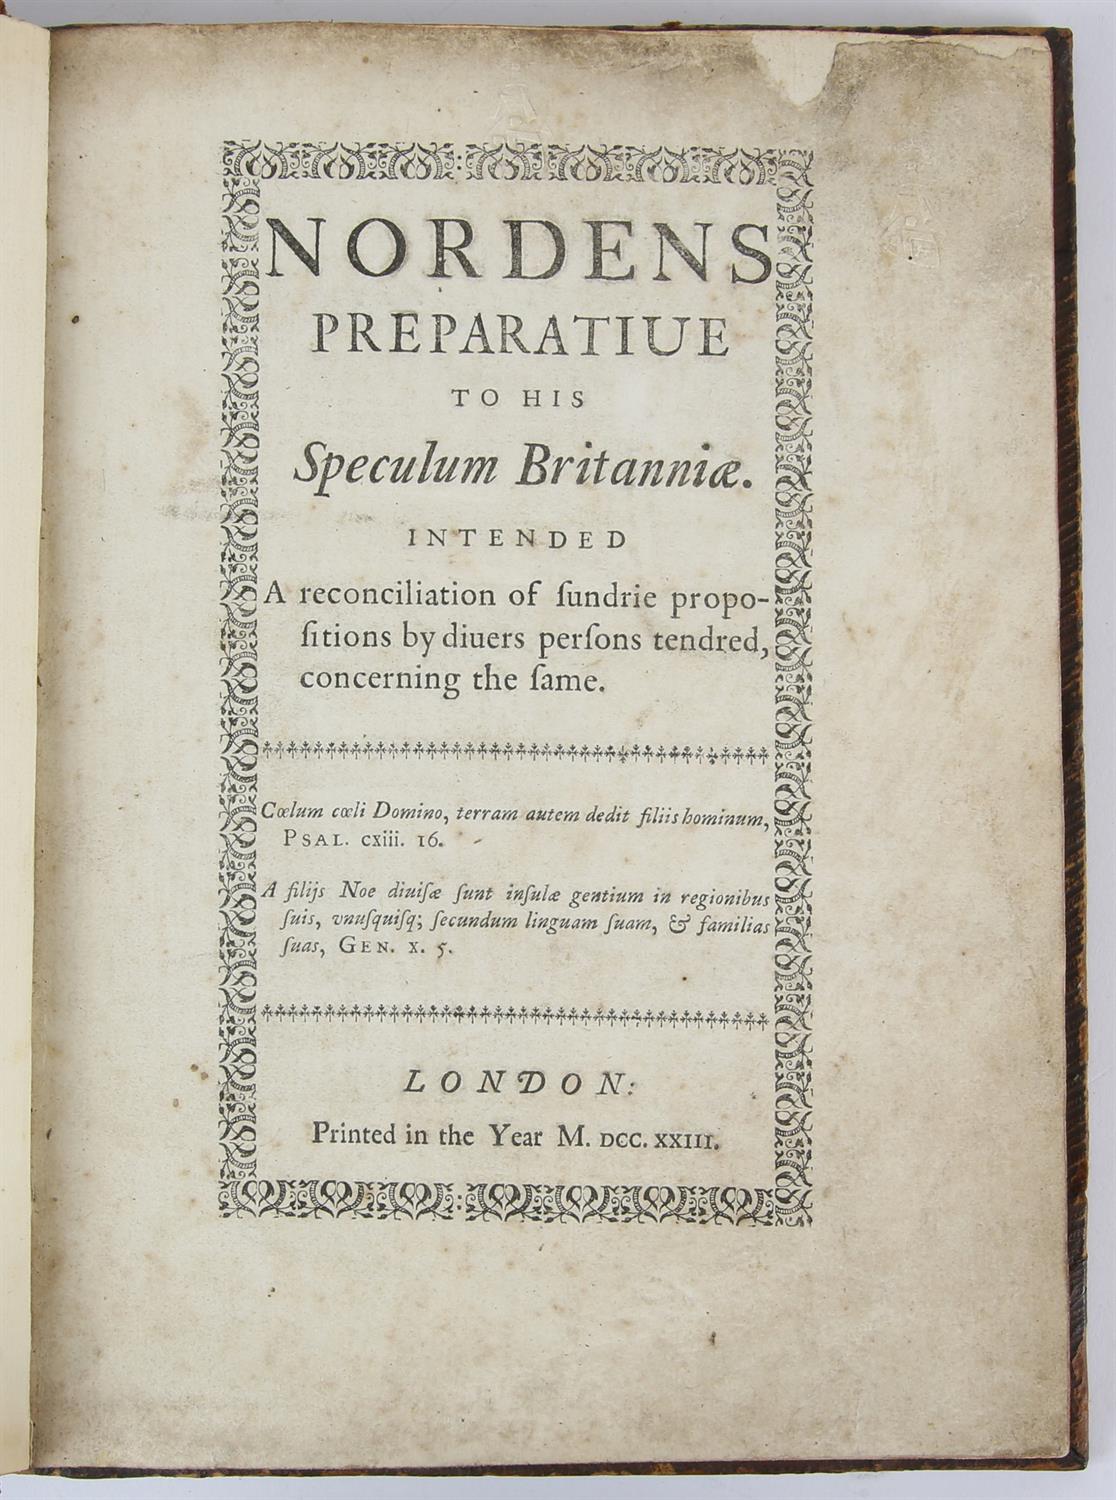 Norden, John, 'Nordens Preparatiue to His Speculum Britanniae, intended a reconciliation of sundrie - Image 4 of 6